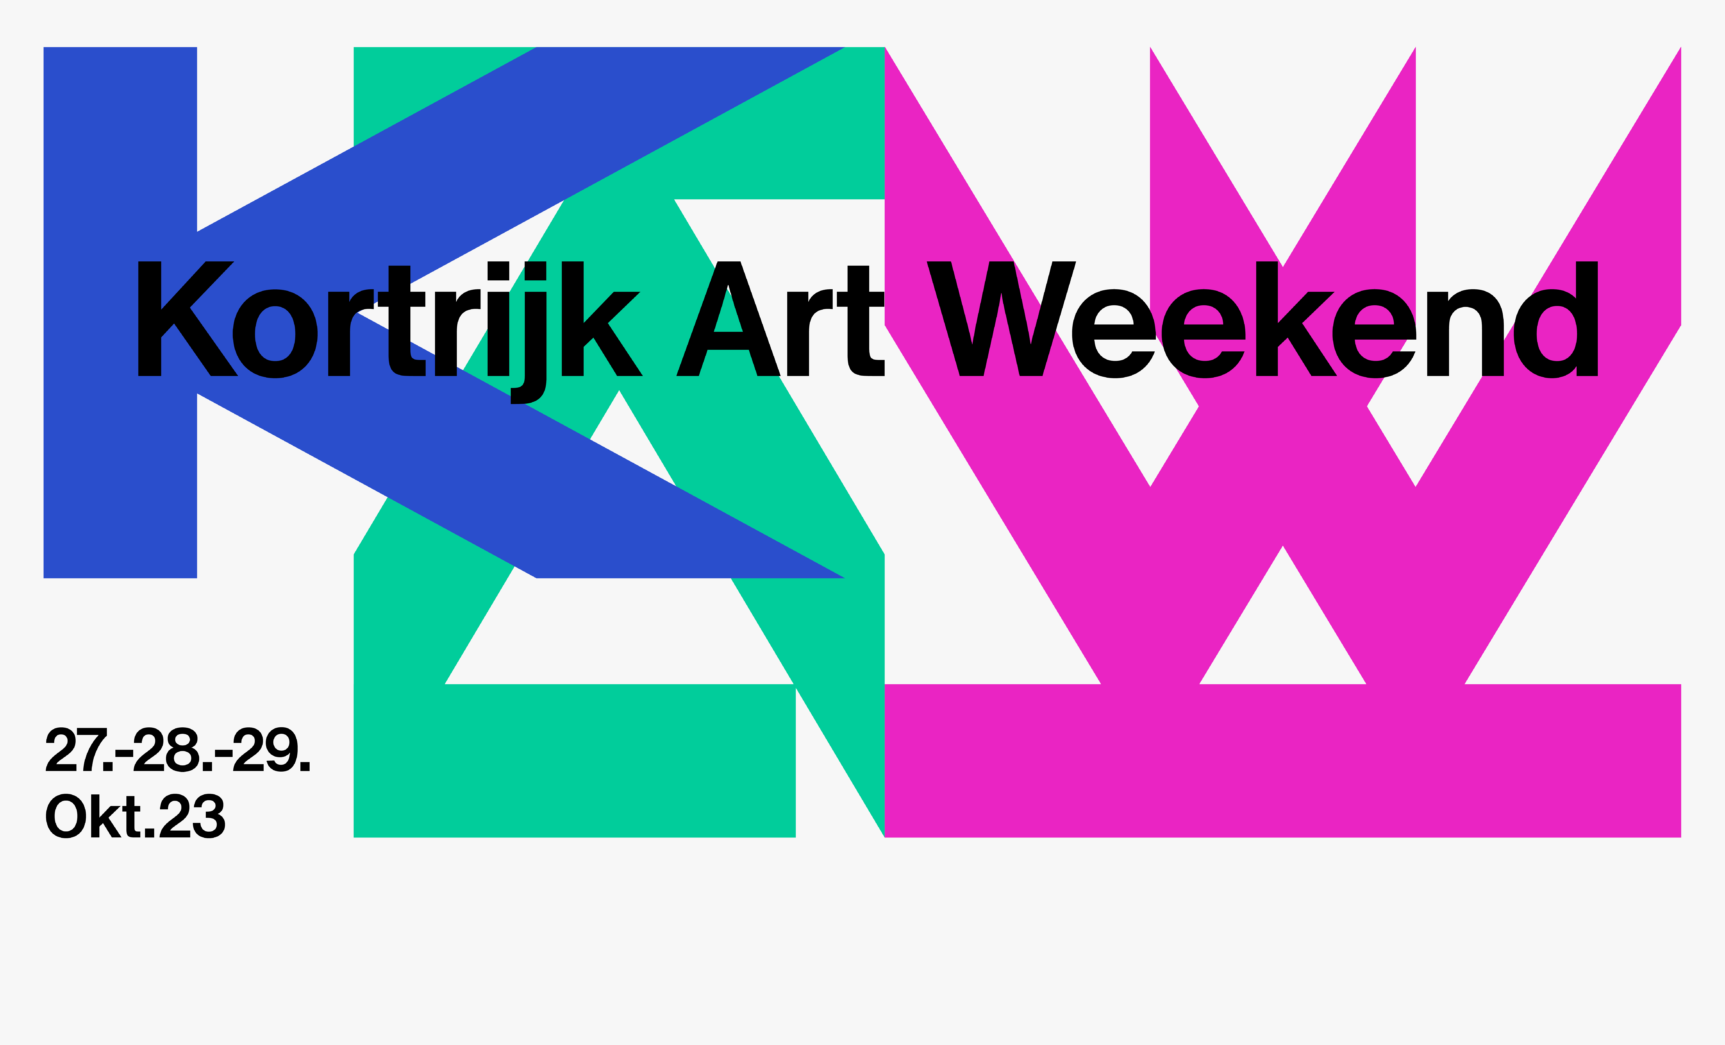 Kortrijk Art Weekend facebook banner